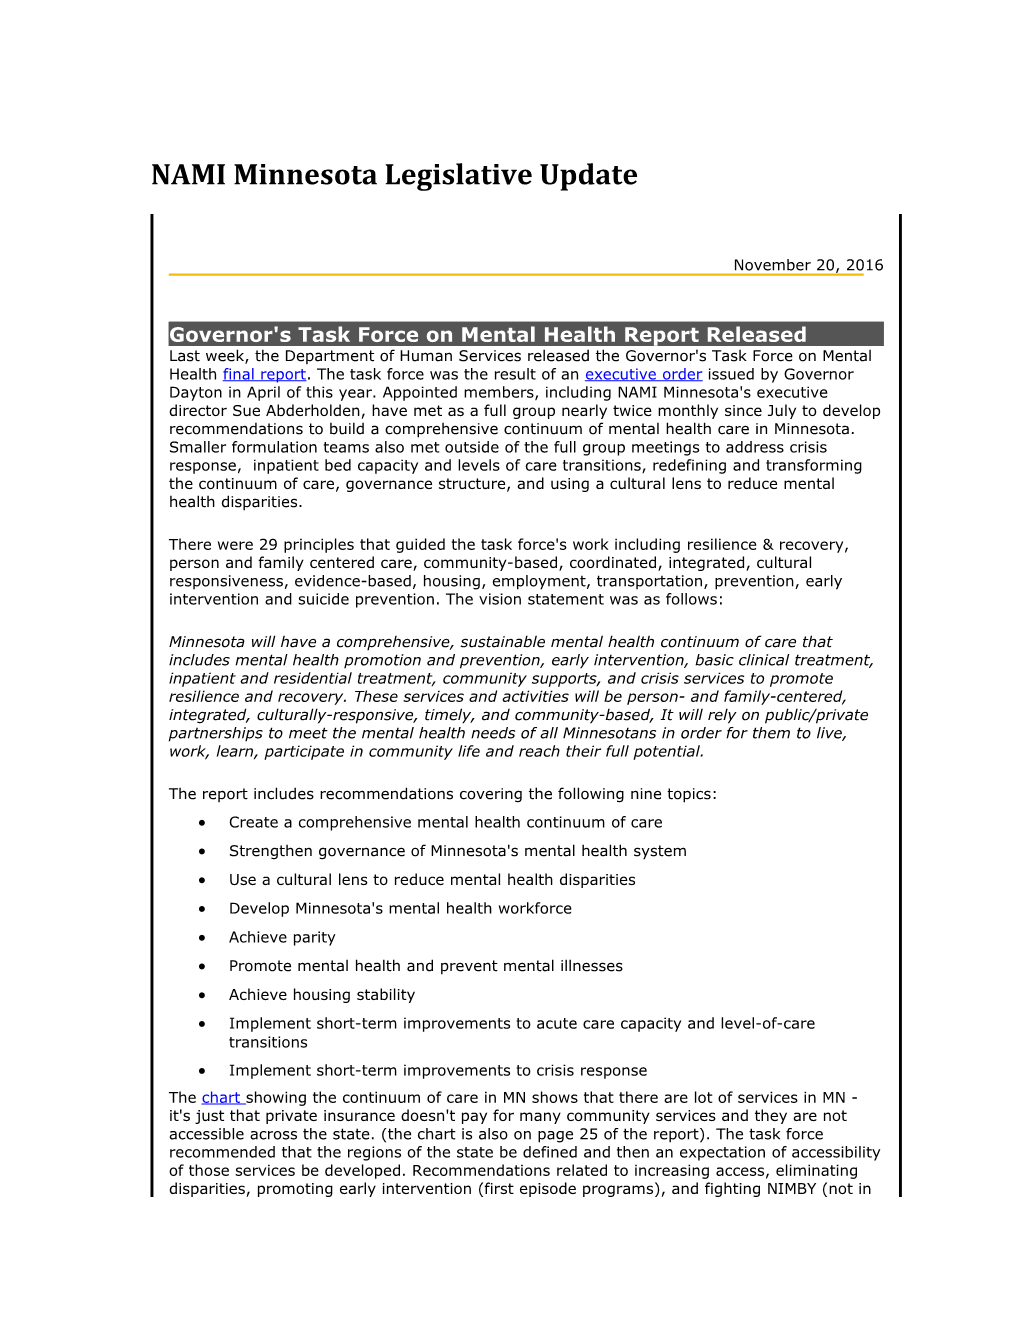 NAMI Minnesota Legislative Update s2